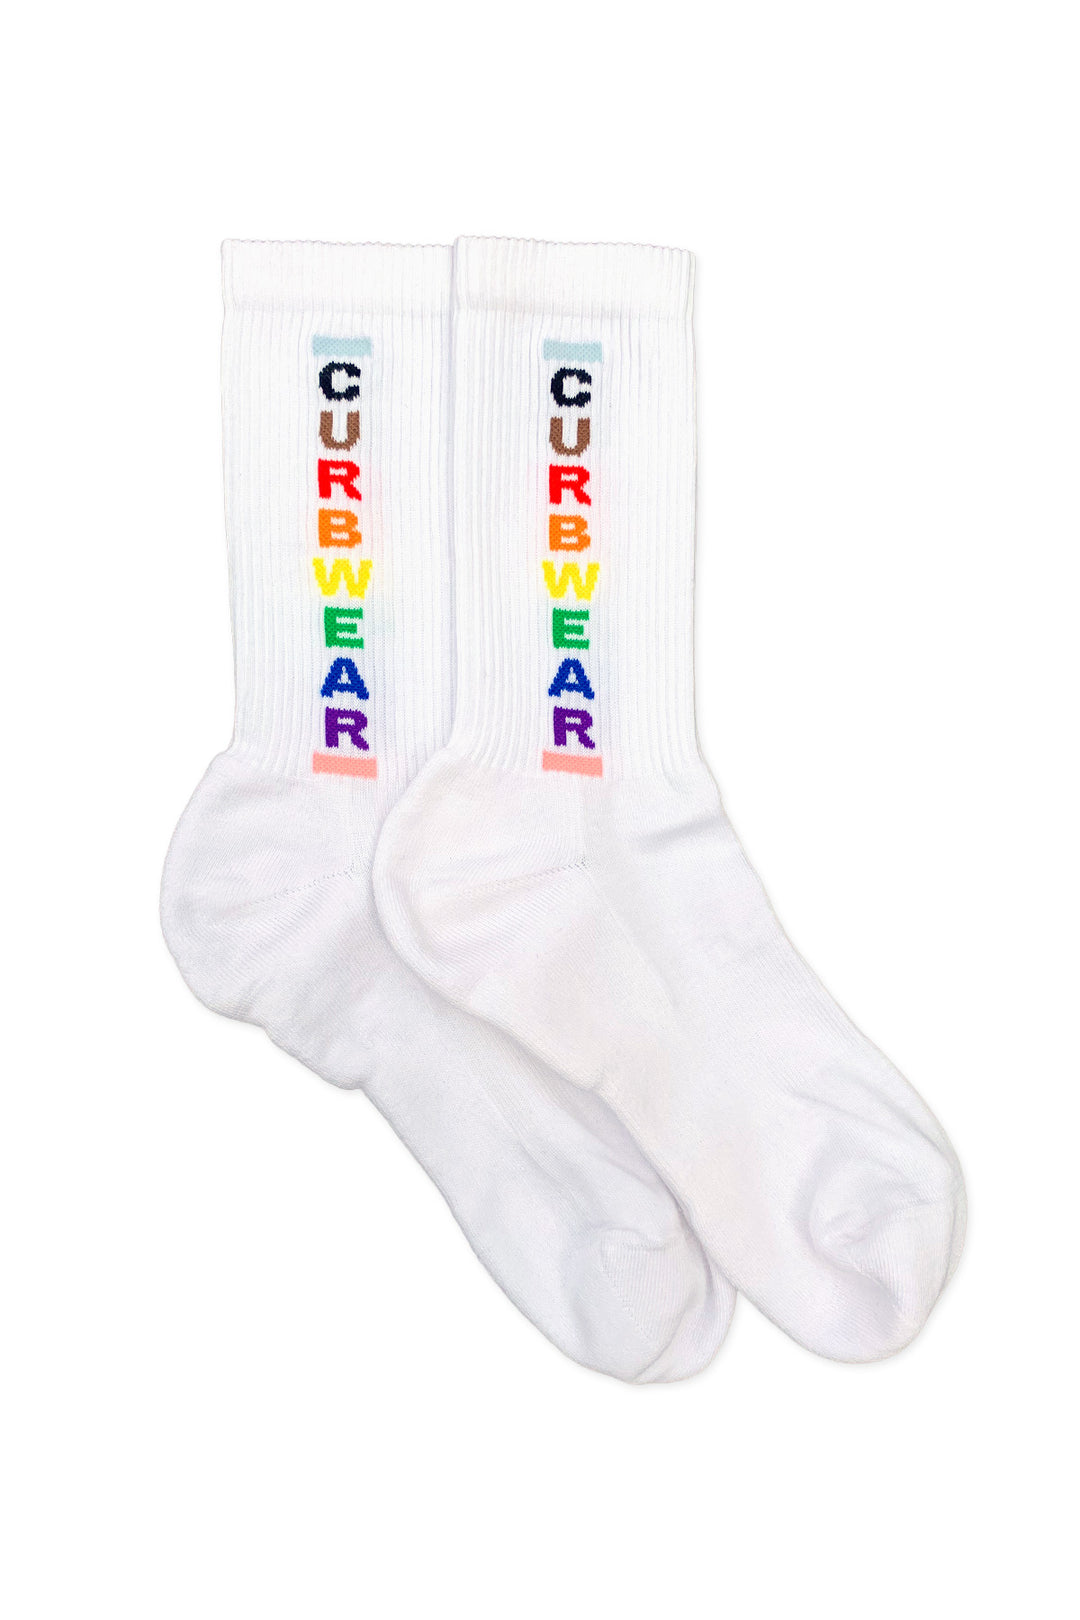 Curbwear Socks Pride